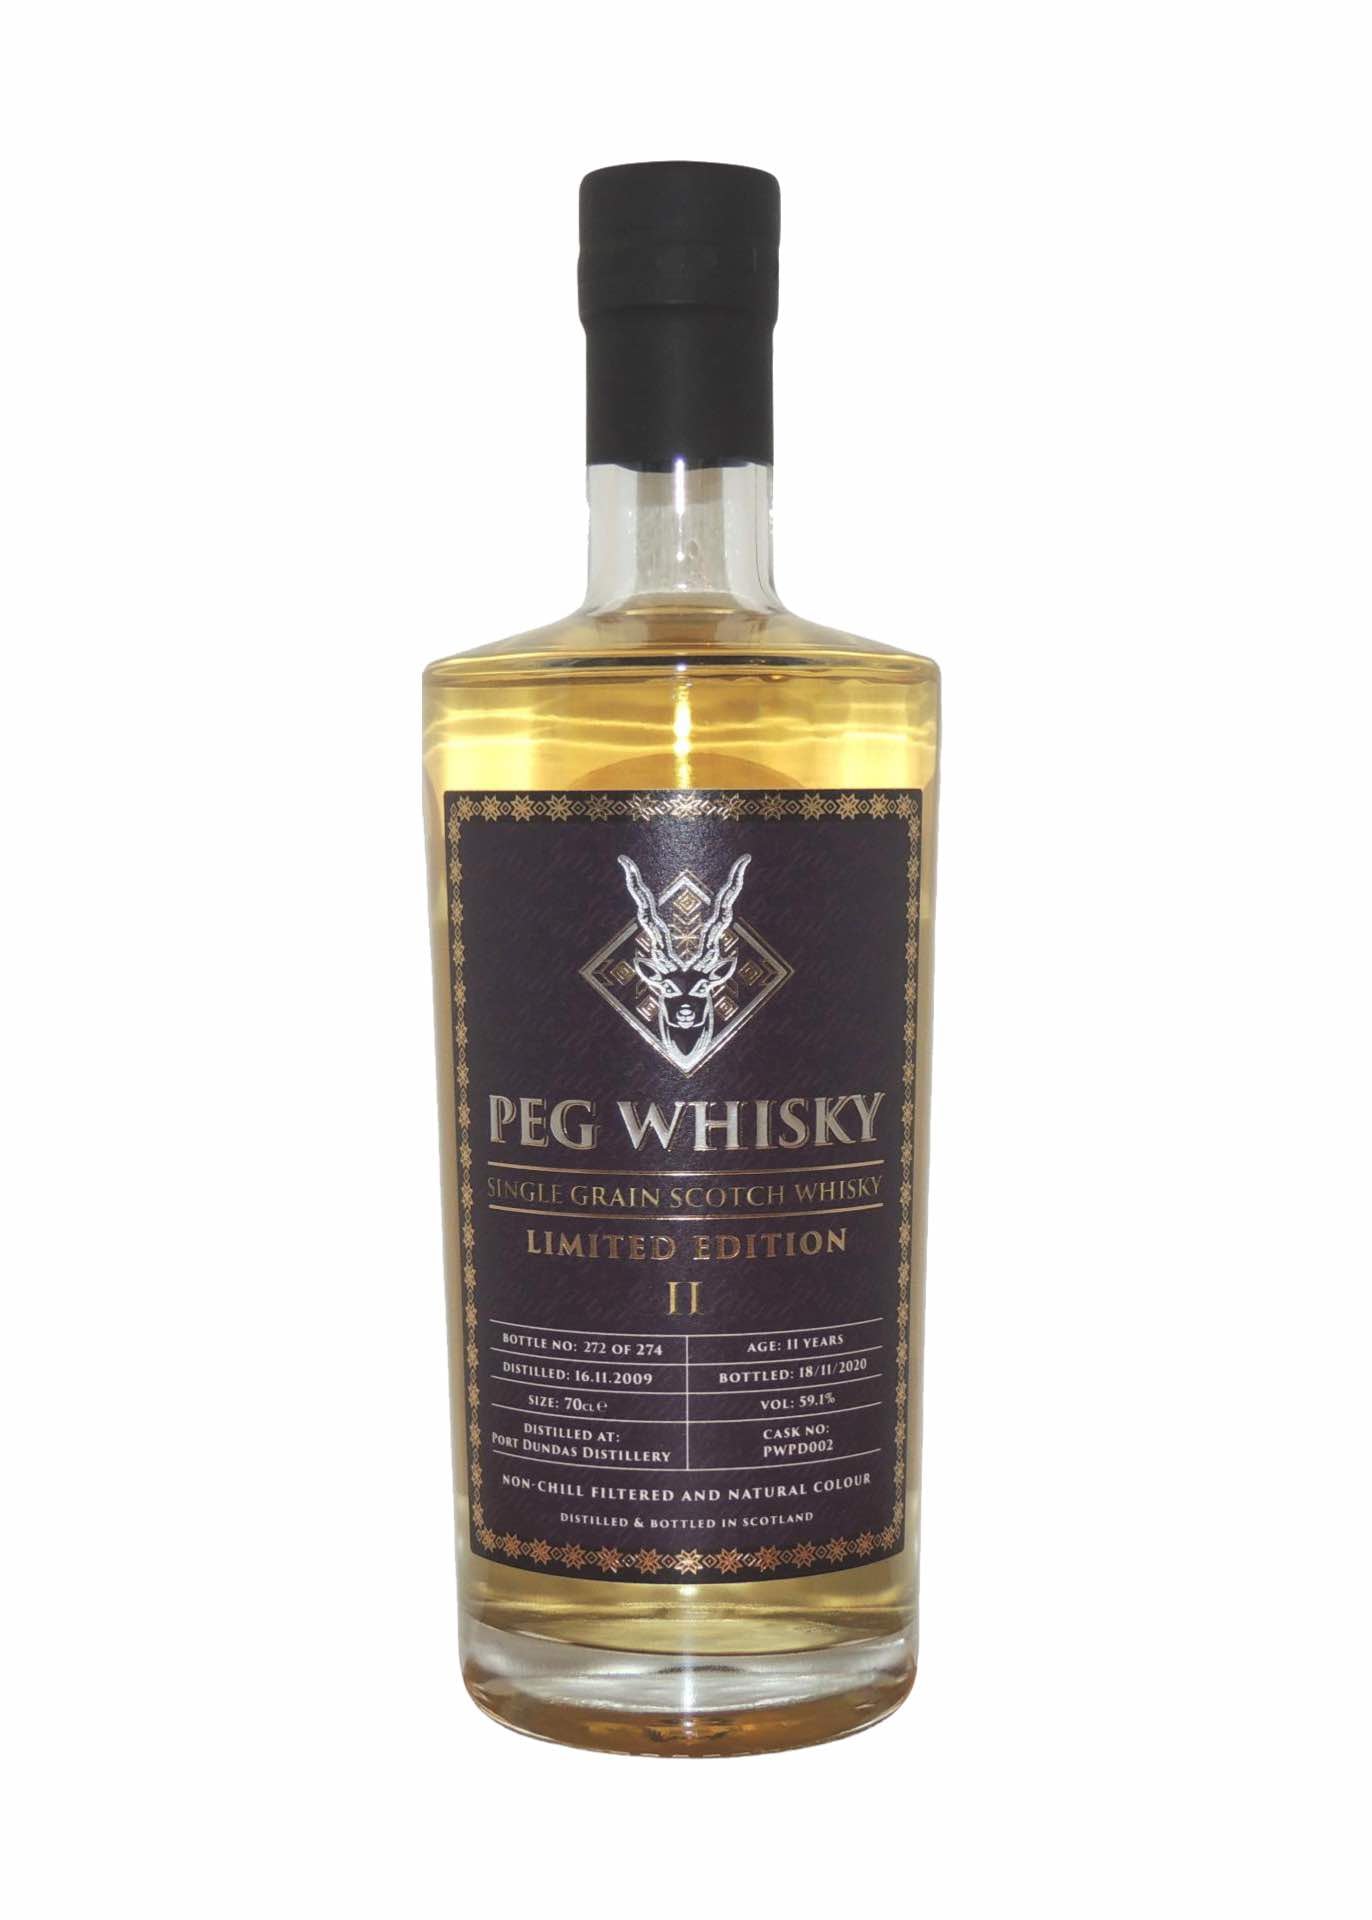 Peg Whisky Limited Edition II, Port Dundas 11 Year Old